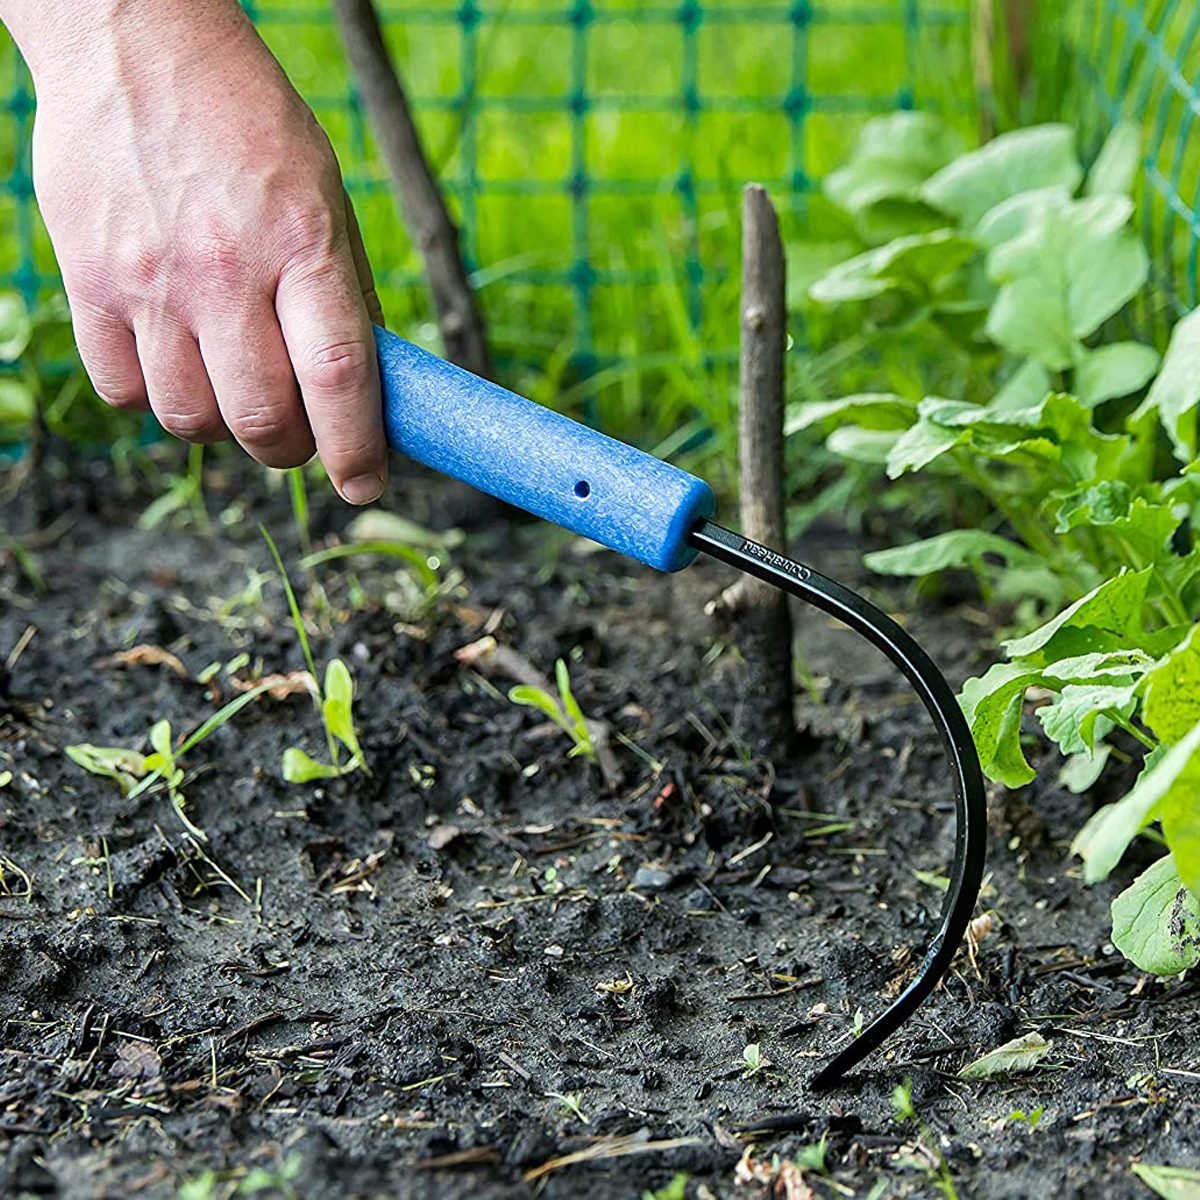 Cobrahead® Original Weeder & Cultivator Garden Hand Tool Ecomm Amazon.com